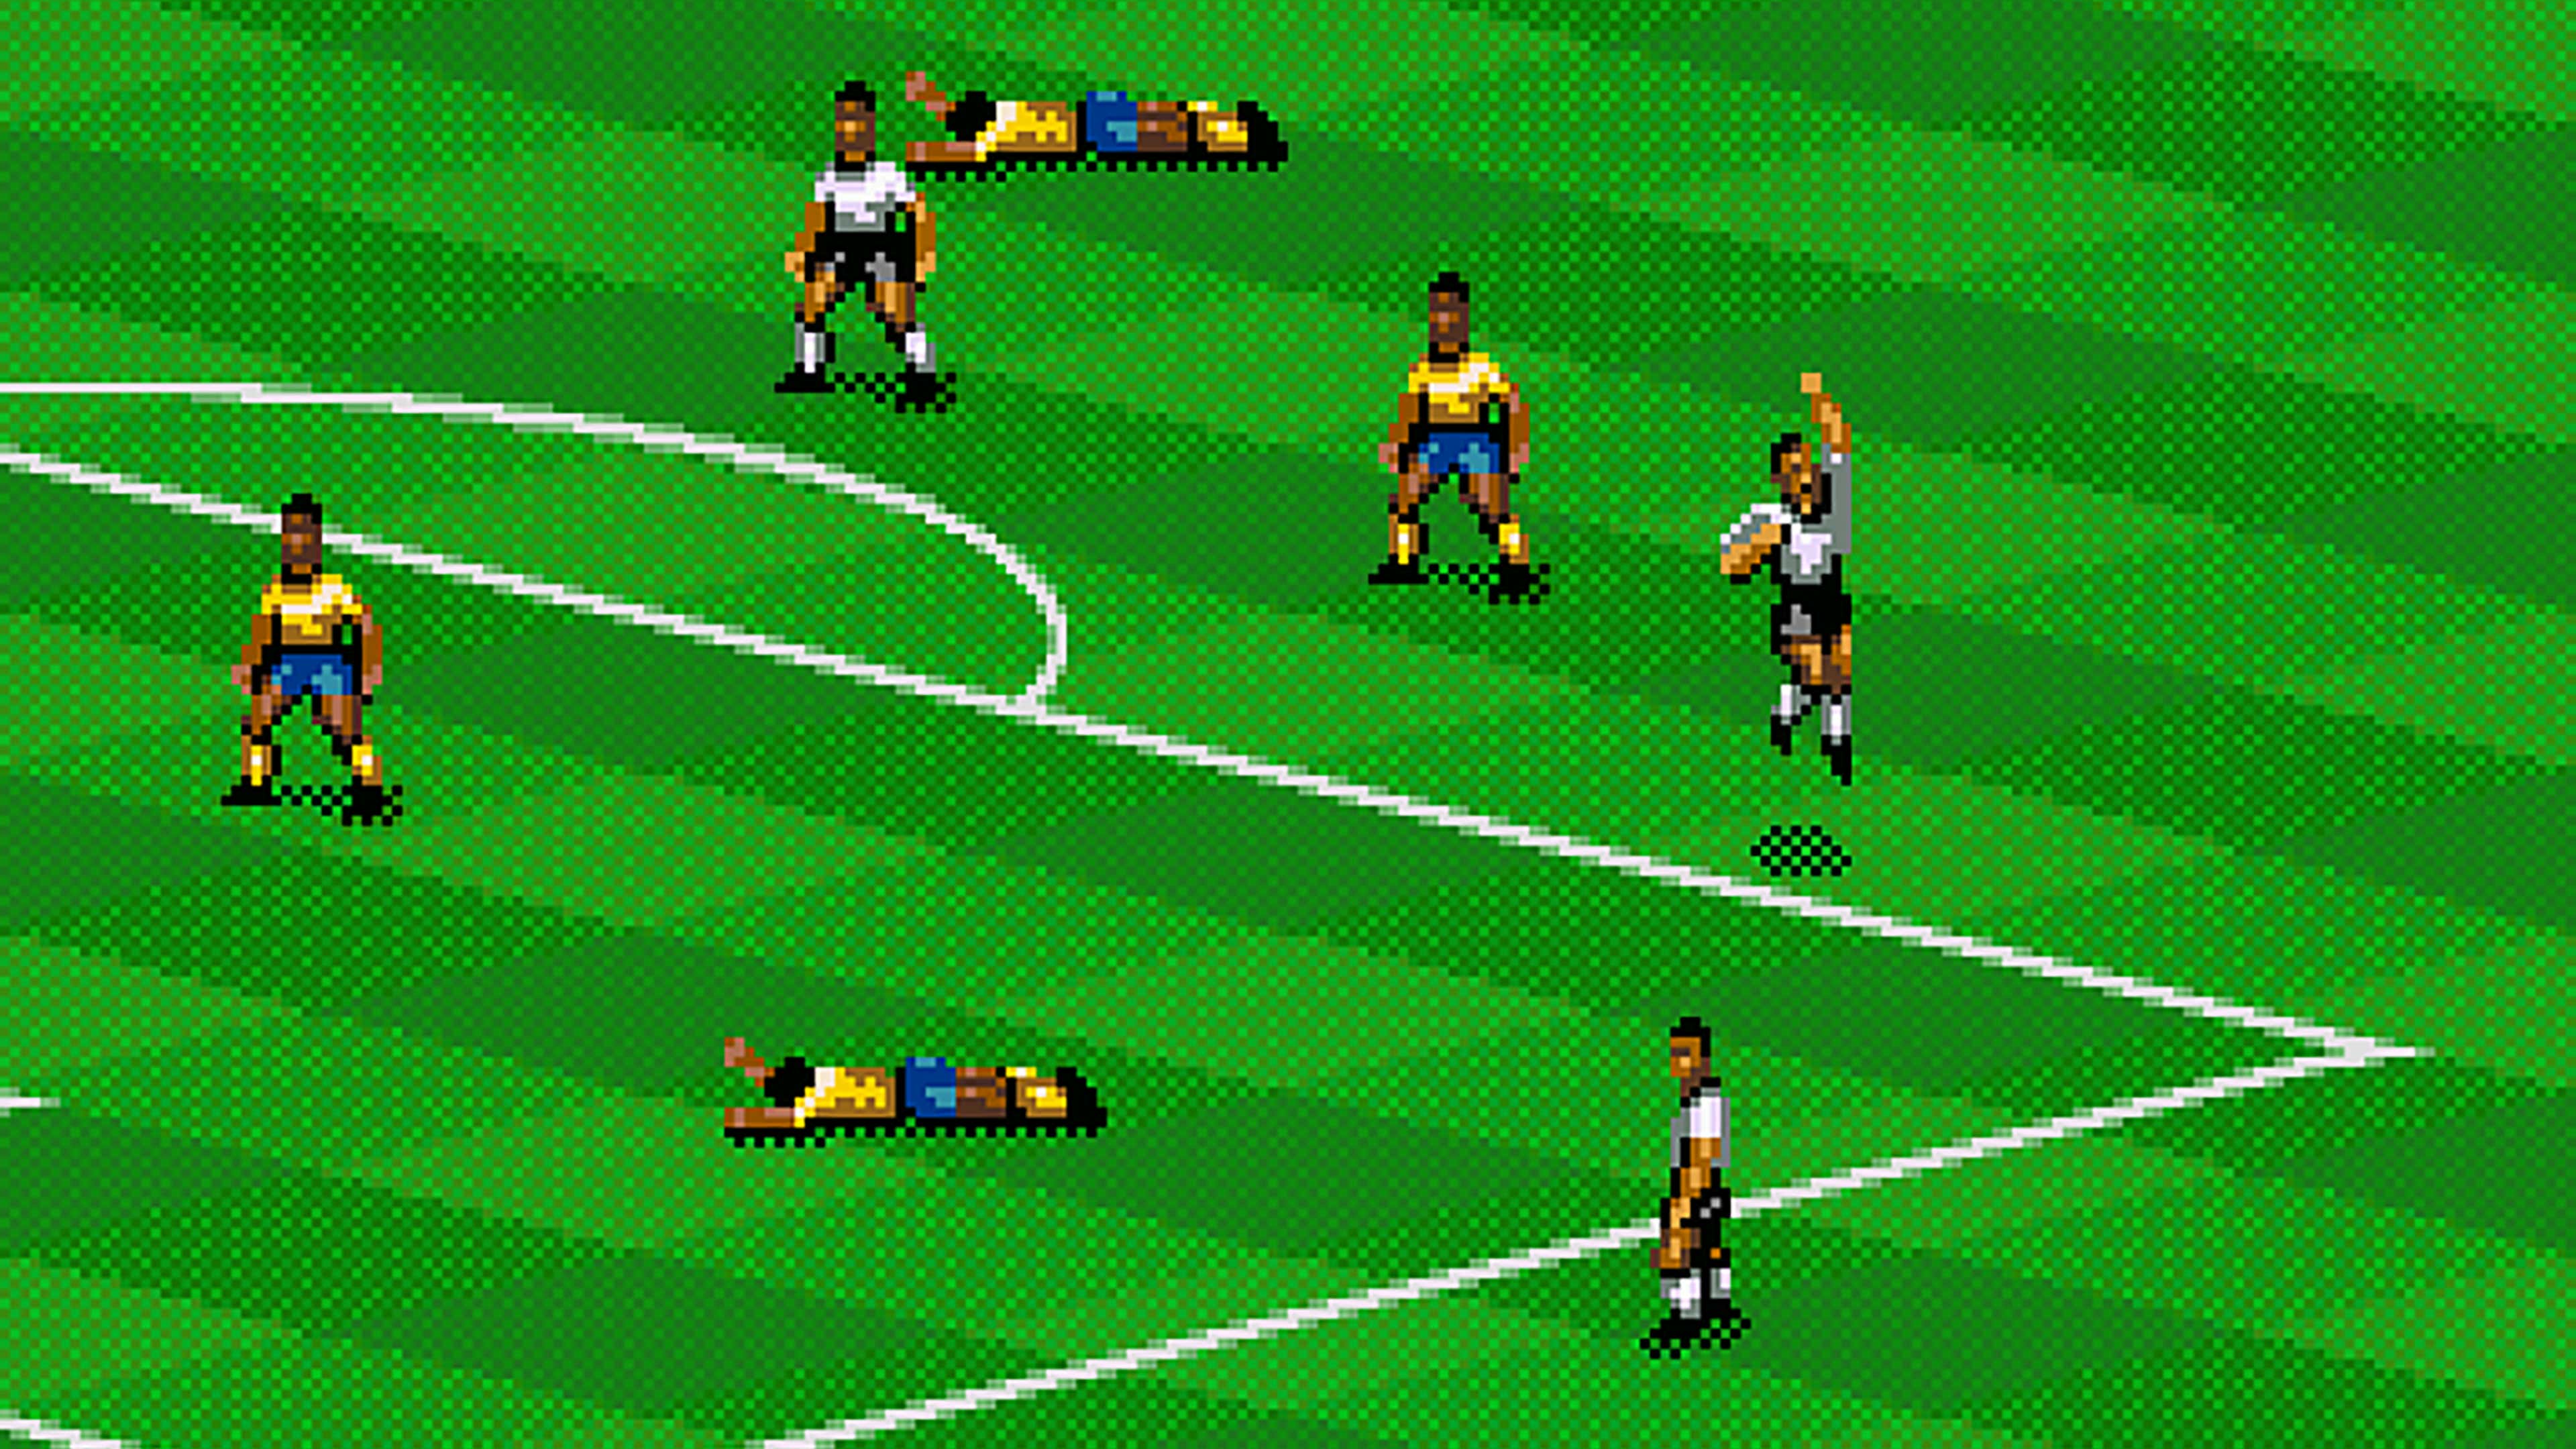 FIFA (video game series) - Wikipedia